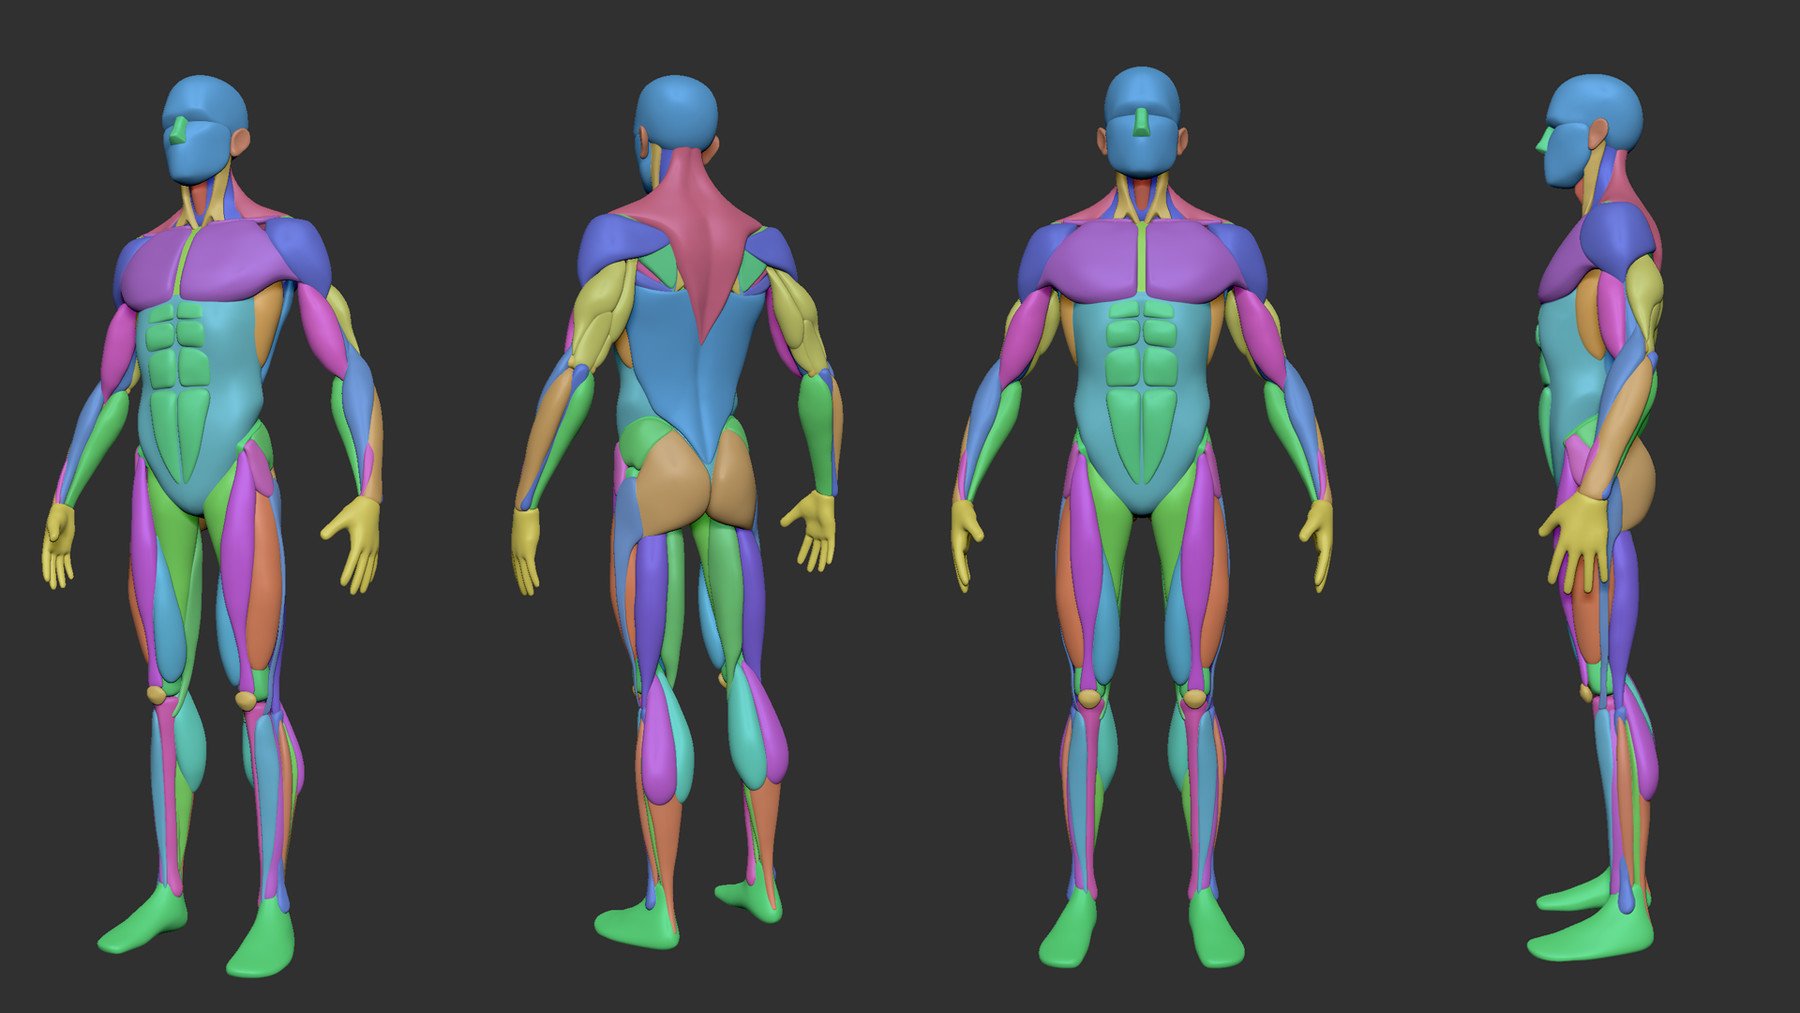 ArtStation - Simplified Anatomy Basemesh - 3-Pack | Artworks